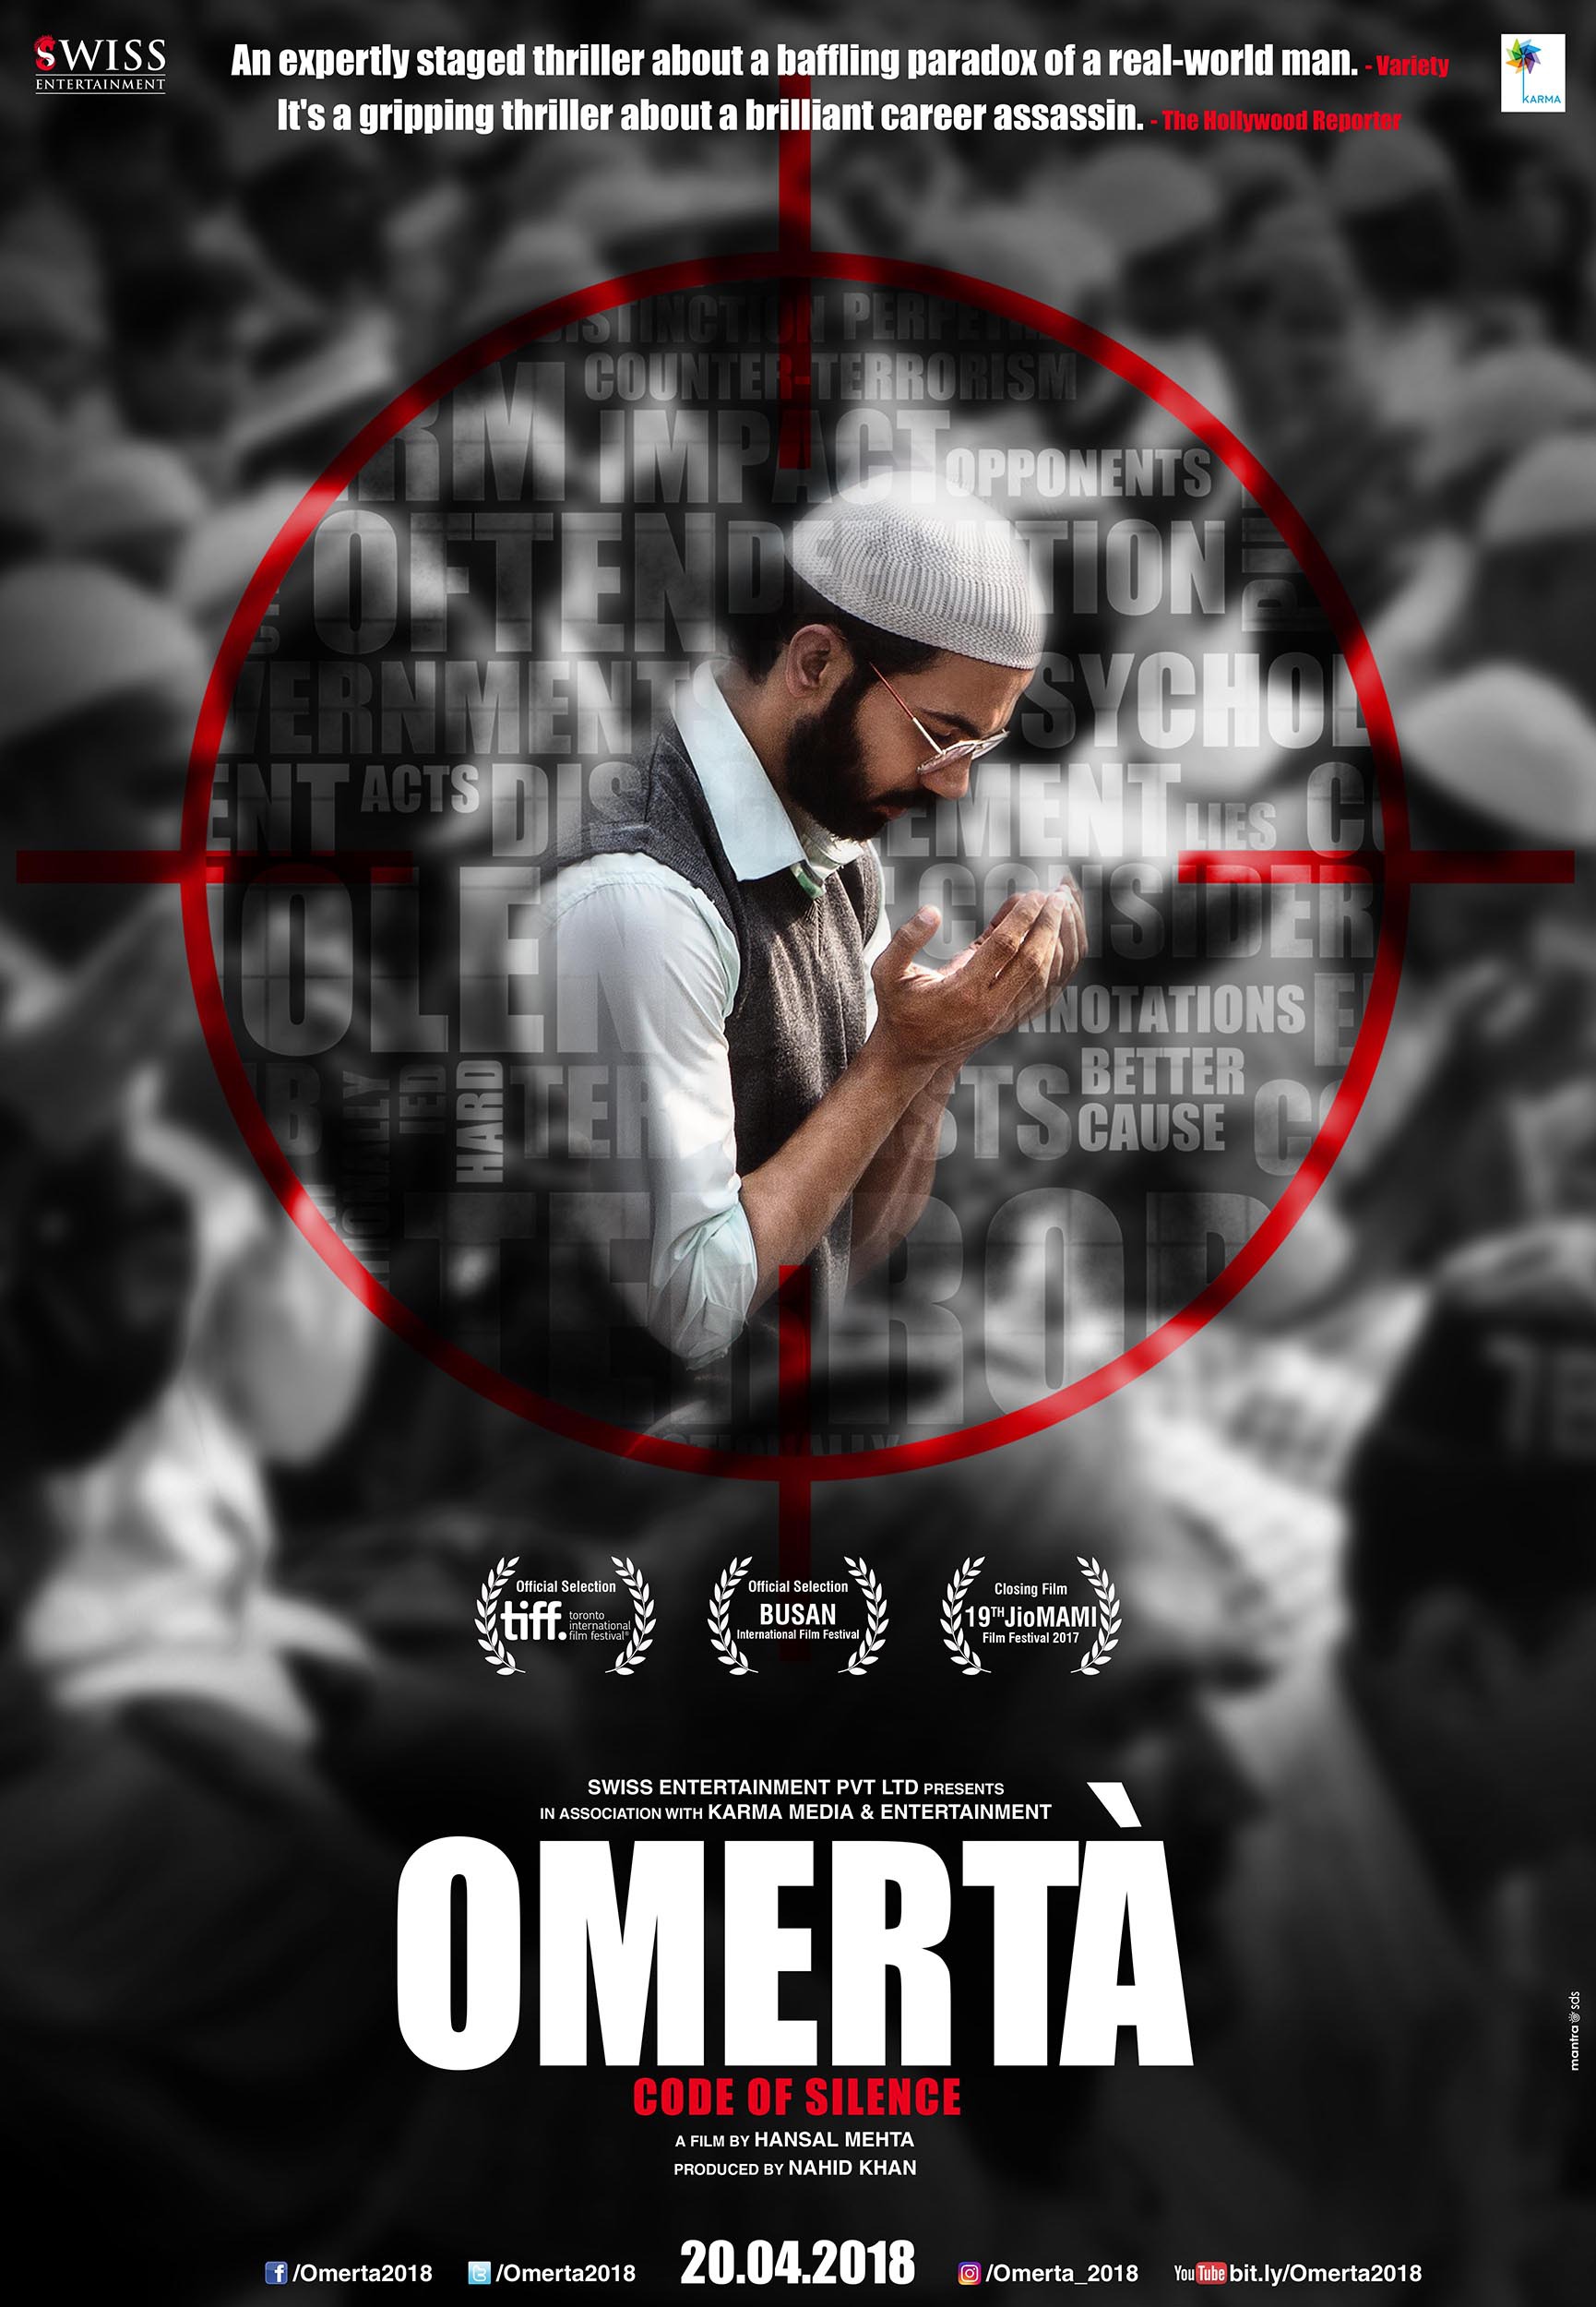 Mega Sized Movie Poster Image for Omerta (#2 of 3)